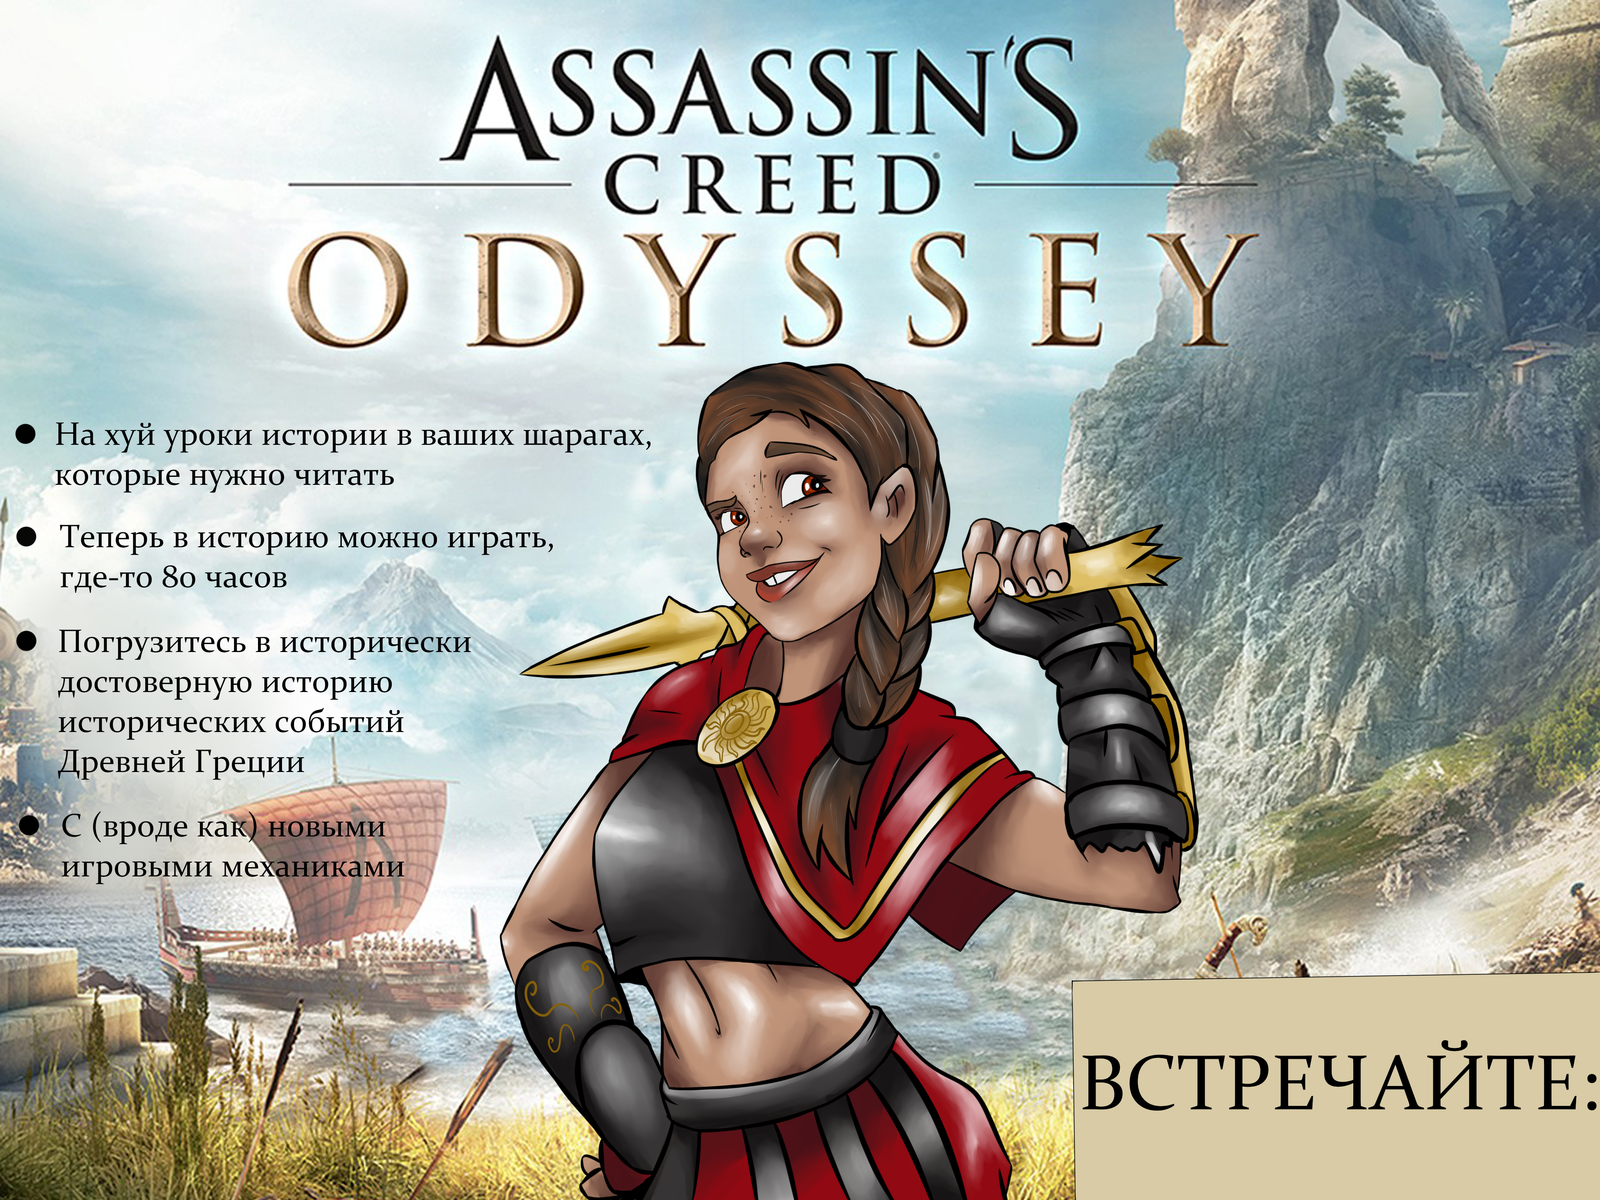 Assassin's creed odyssey coming soon - My, Assassins creed odyssey, Cassandra, Assassins creed, Comics, Humor, Assassin, Odyssey, Ubisoft, Longpost